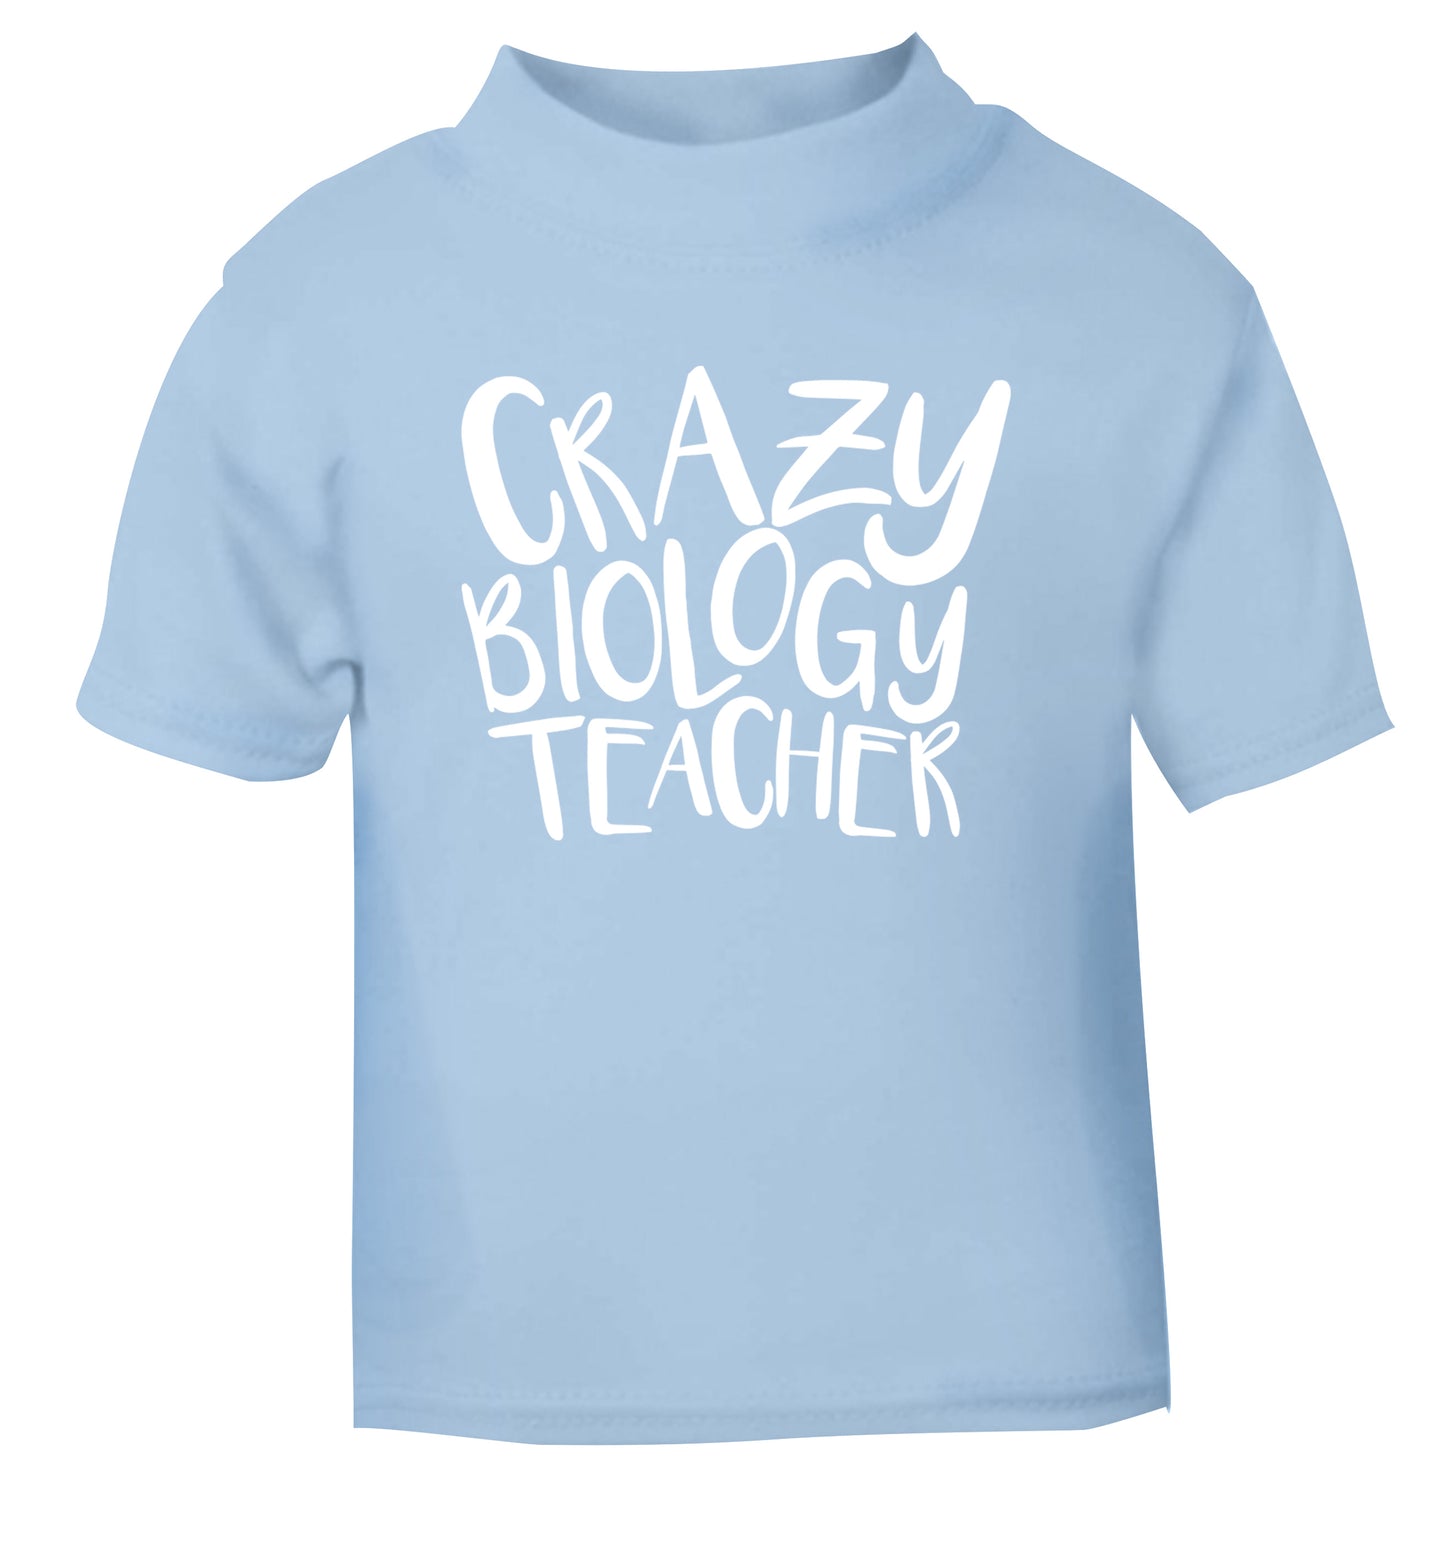 Crazy biology teacher light blue Baby Toddler Tshirt 2 Years